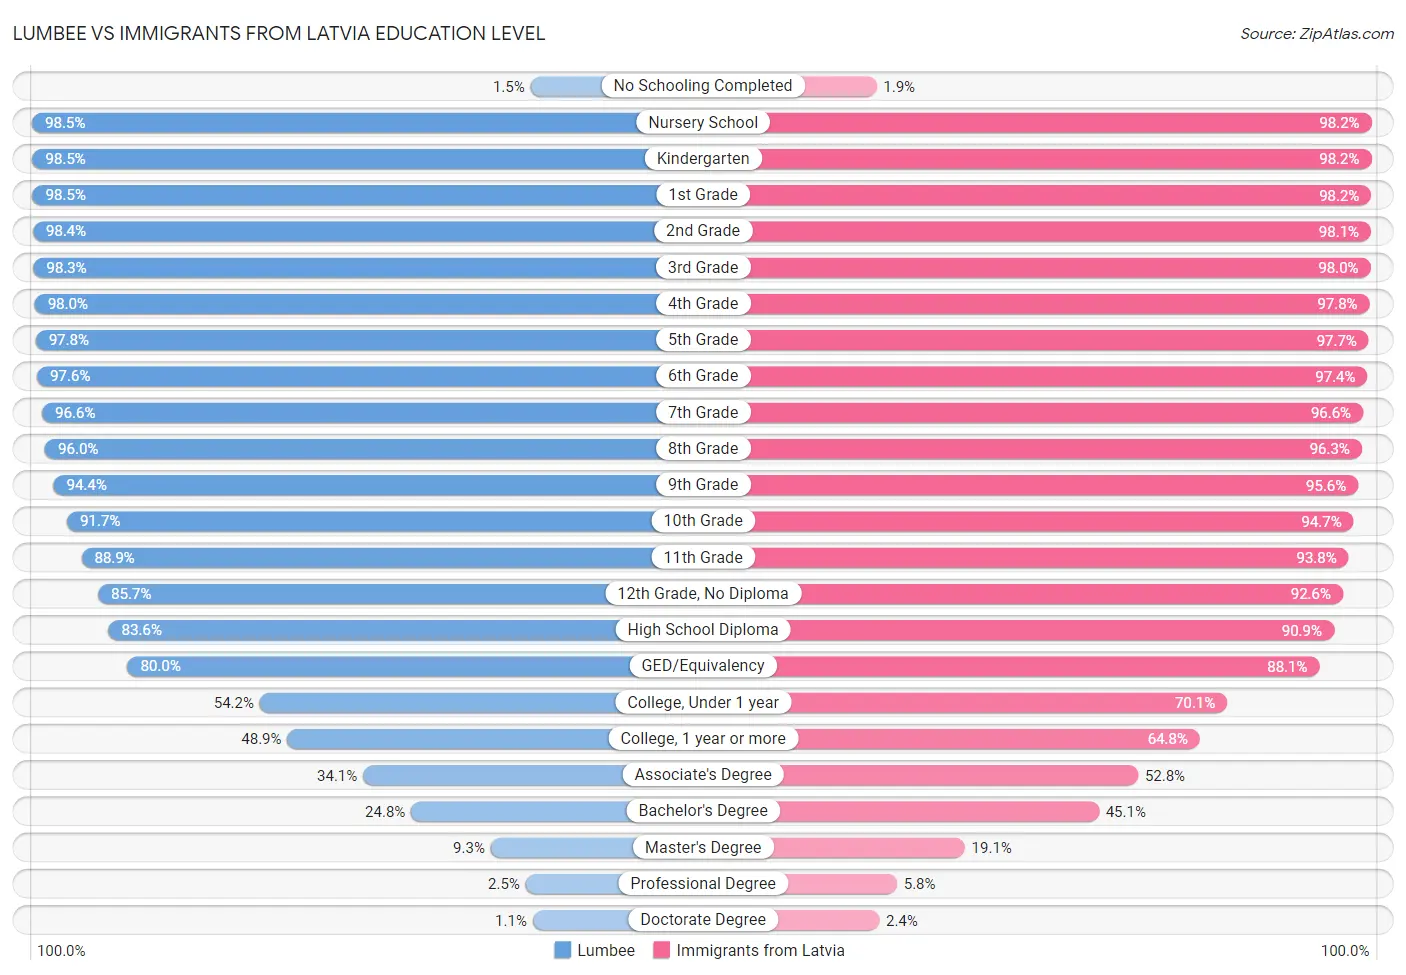 Lumbee vs Immigrants from Latvia Education Level